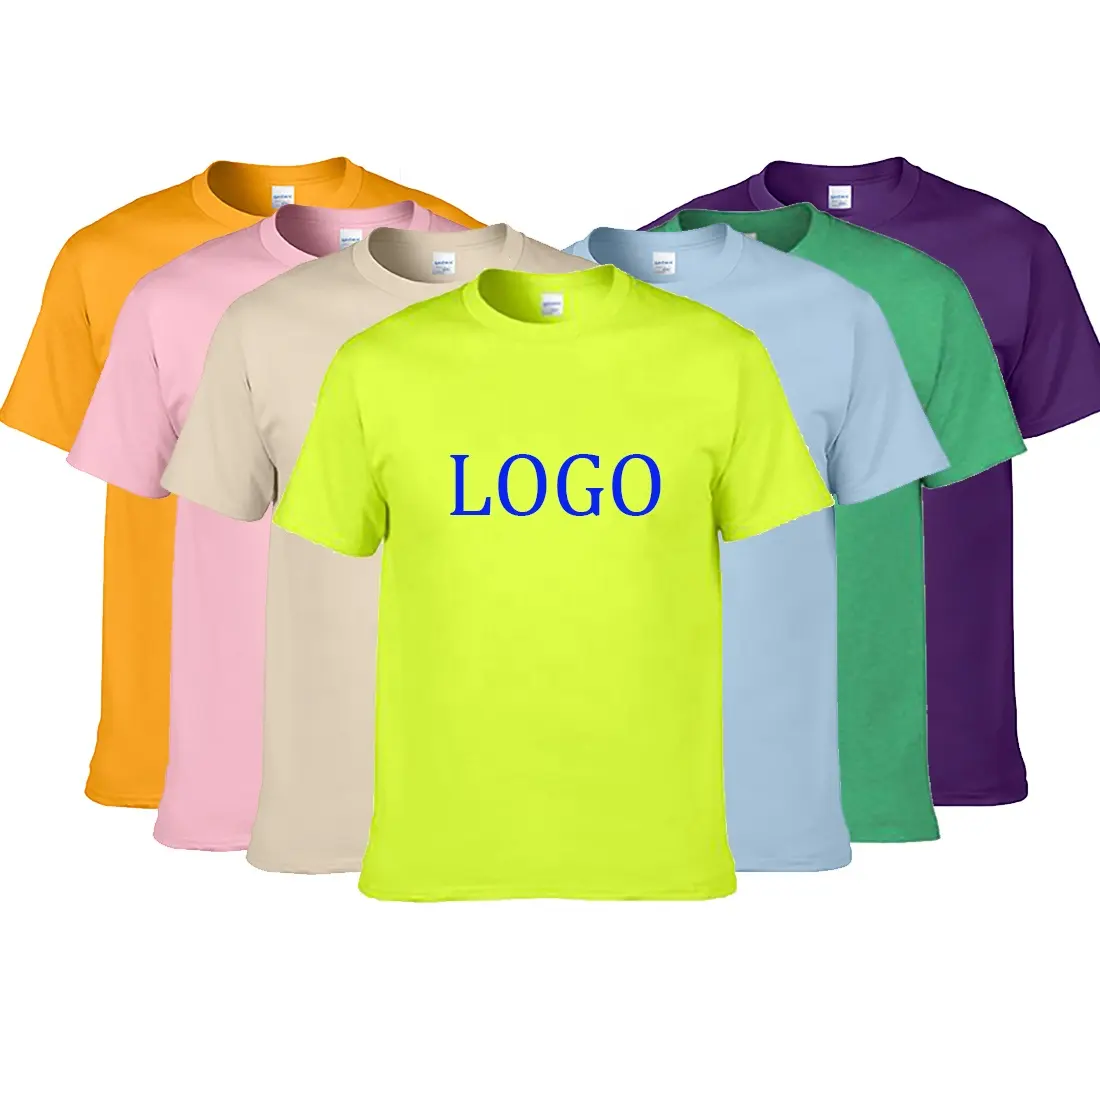 Wholesale t shirts cheap clothes in bulk 100% cotton unisex top for men fashion blank xs-5xl plus size t shirt customization